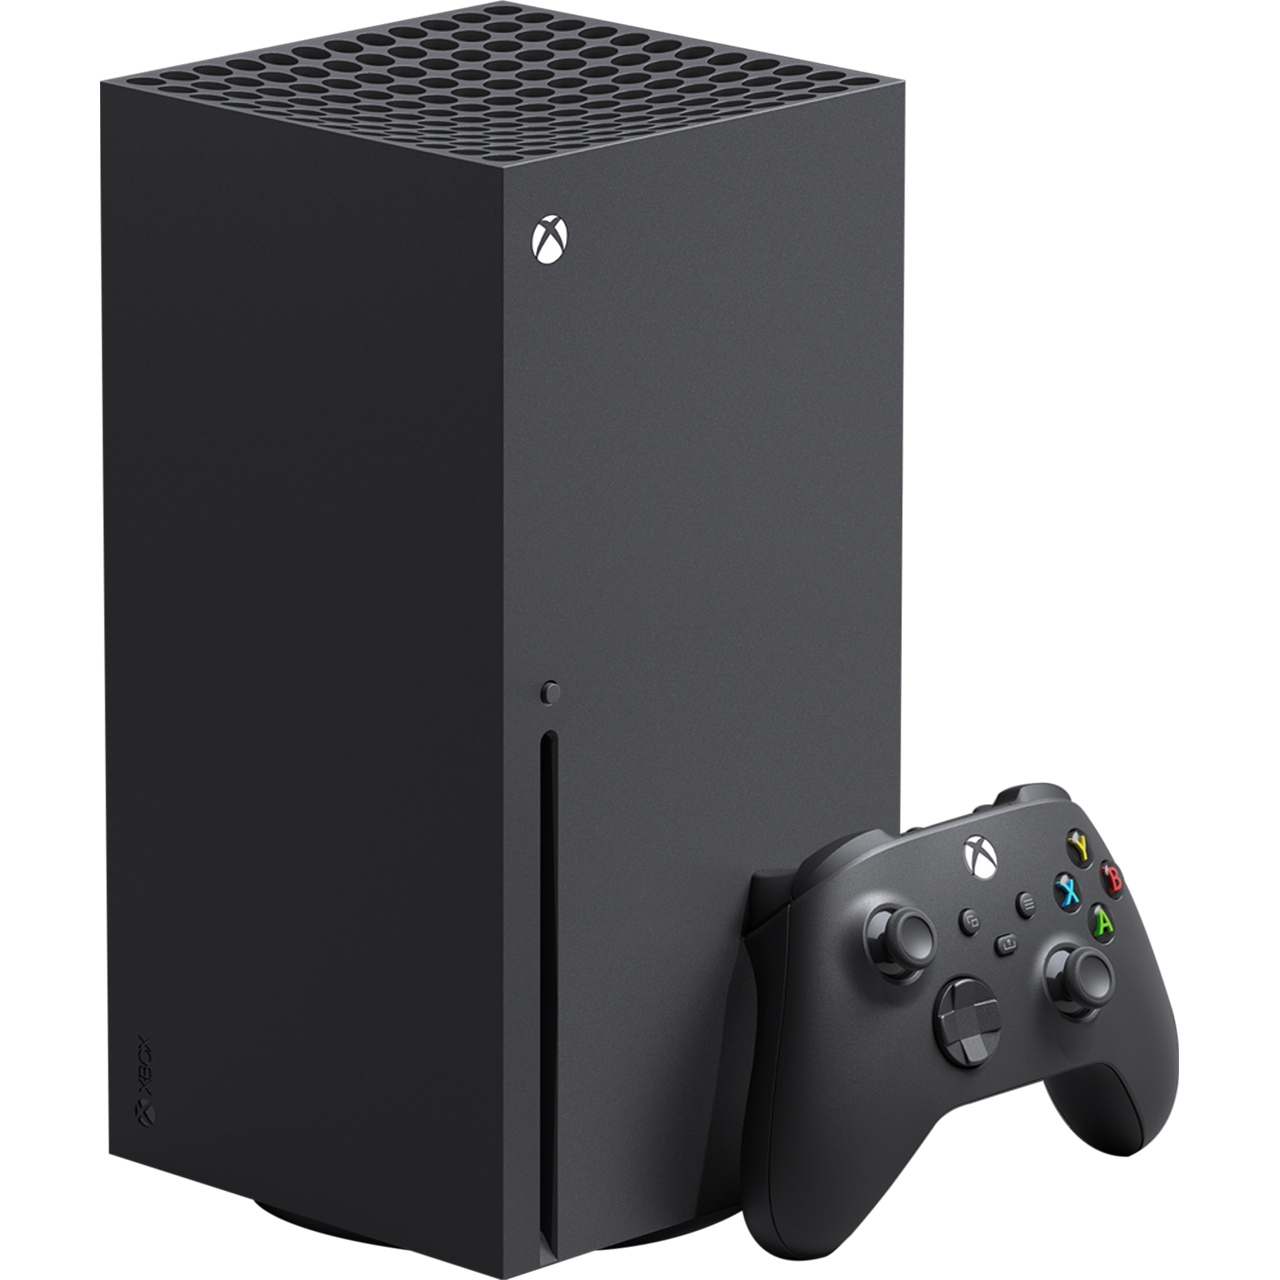 No Xbox Series X pre-order? You can now win an Xbox fridge